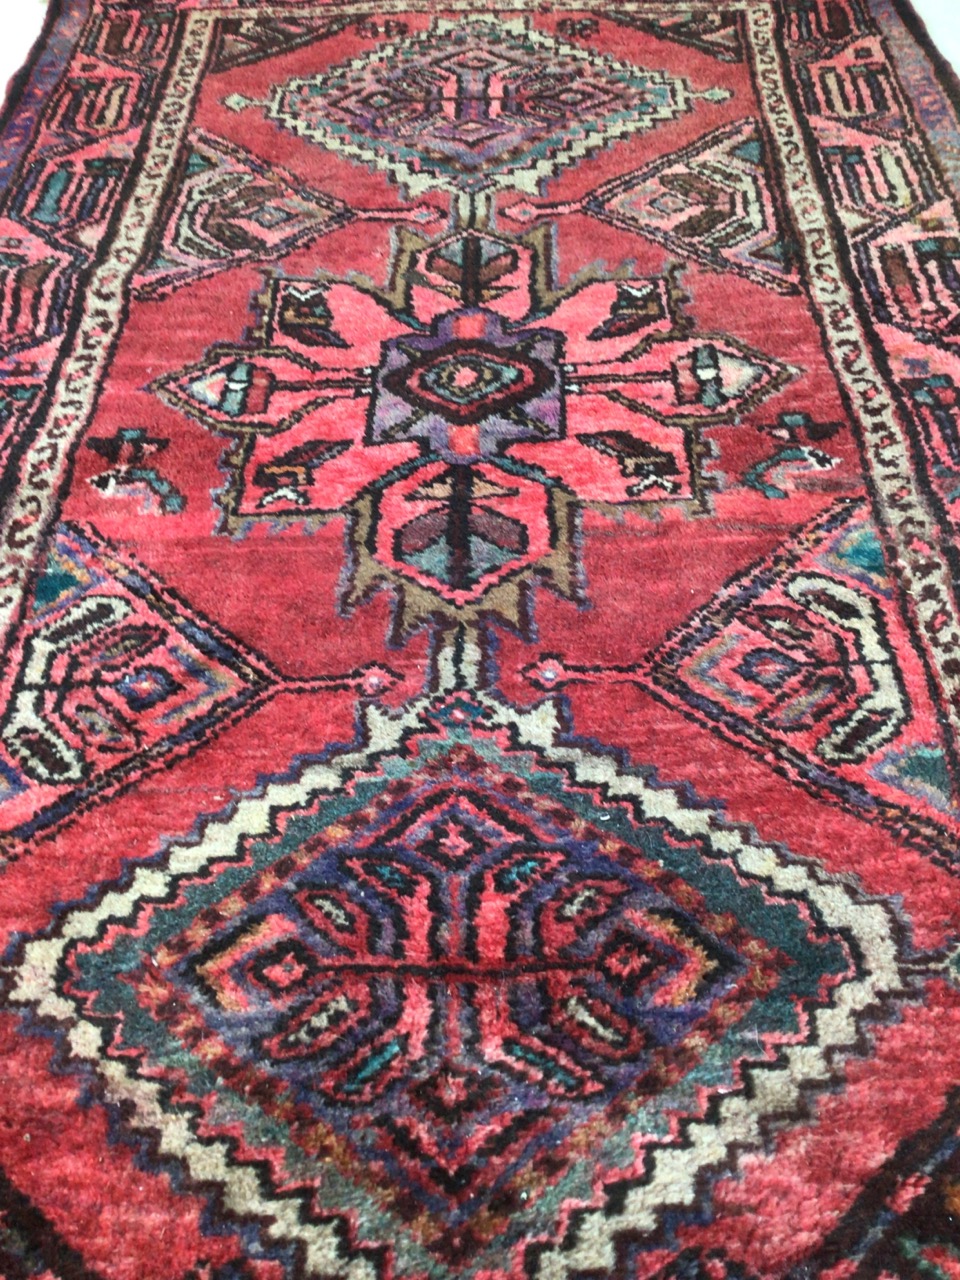 A vintage handmade Iranian rugW:95cm x H:156cm includes fringe - Image 2 of 6